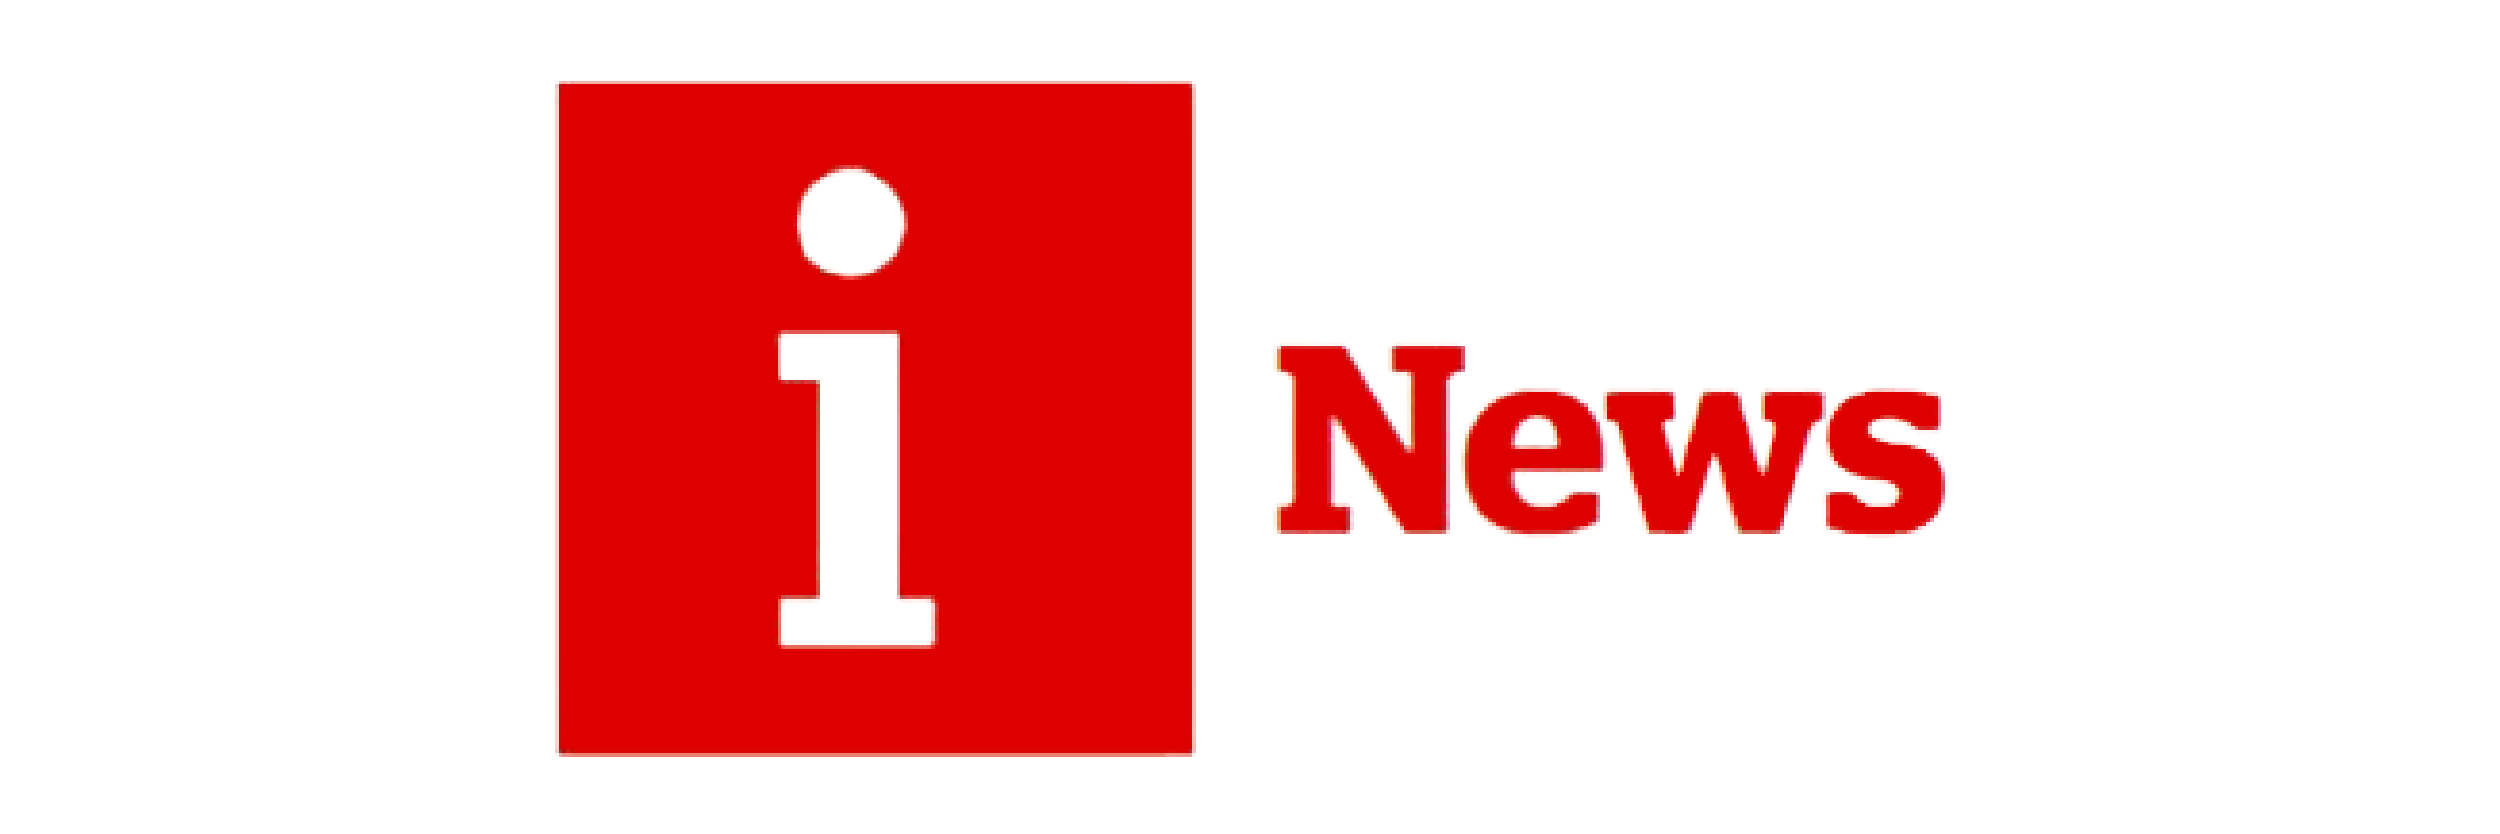 iNews logo